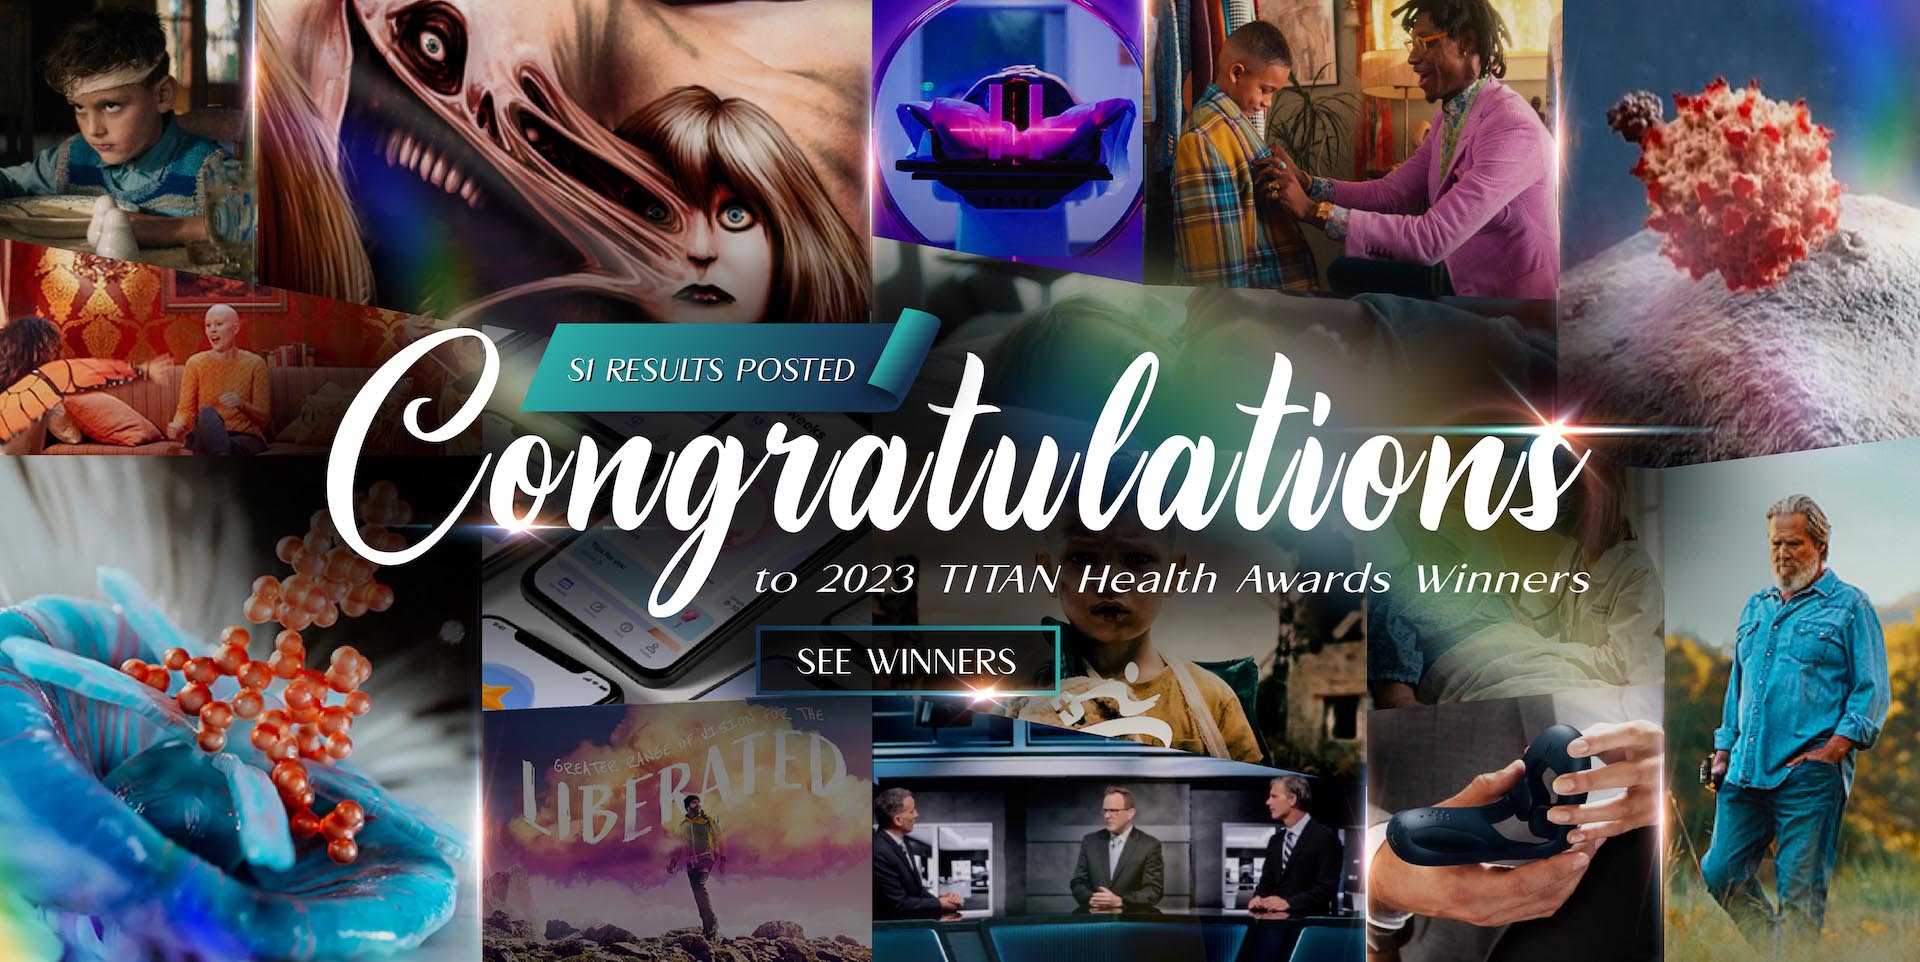 2023 TITAN Health Awards S1 Results Announced!